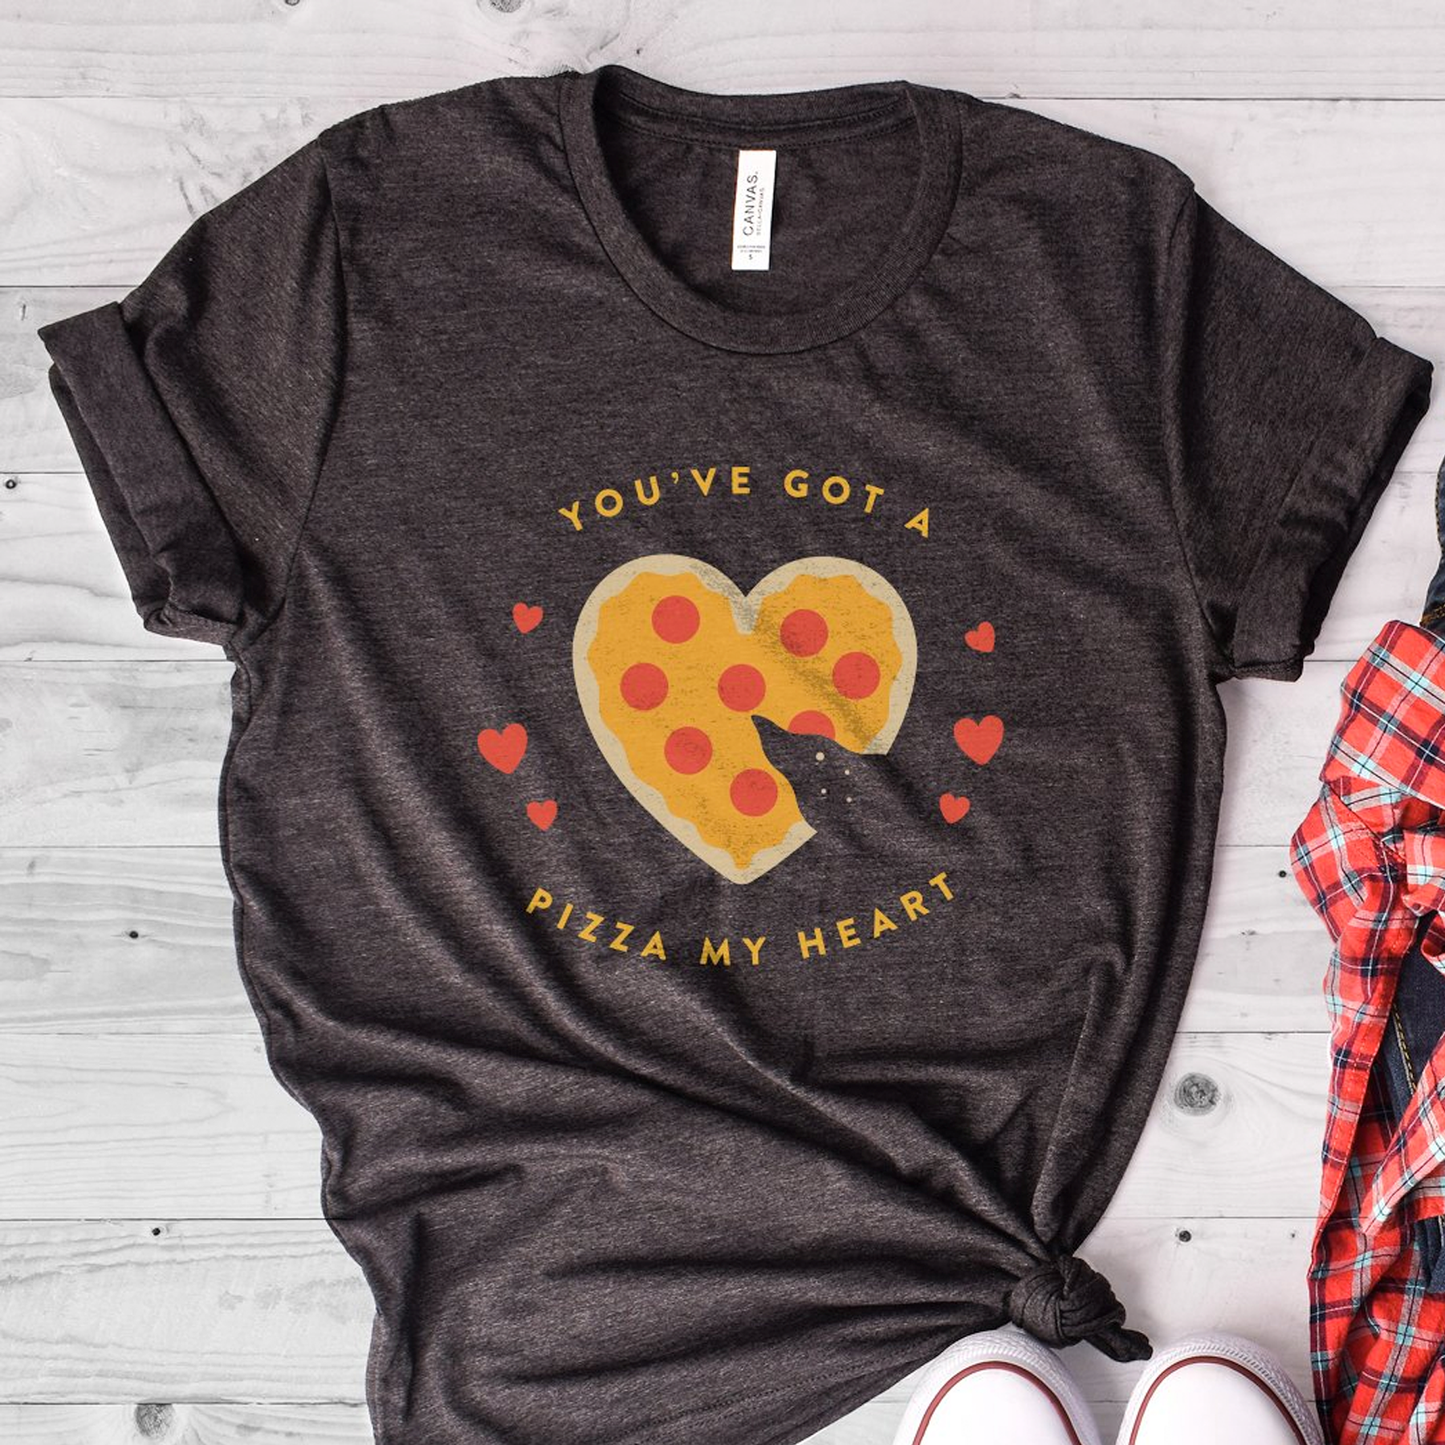 Pizza My Heart Short-Sleeve Unisex T-Shirt